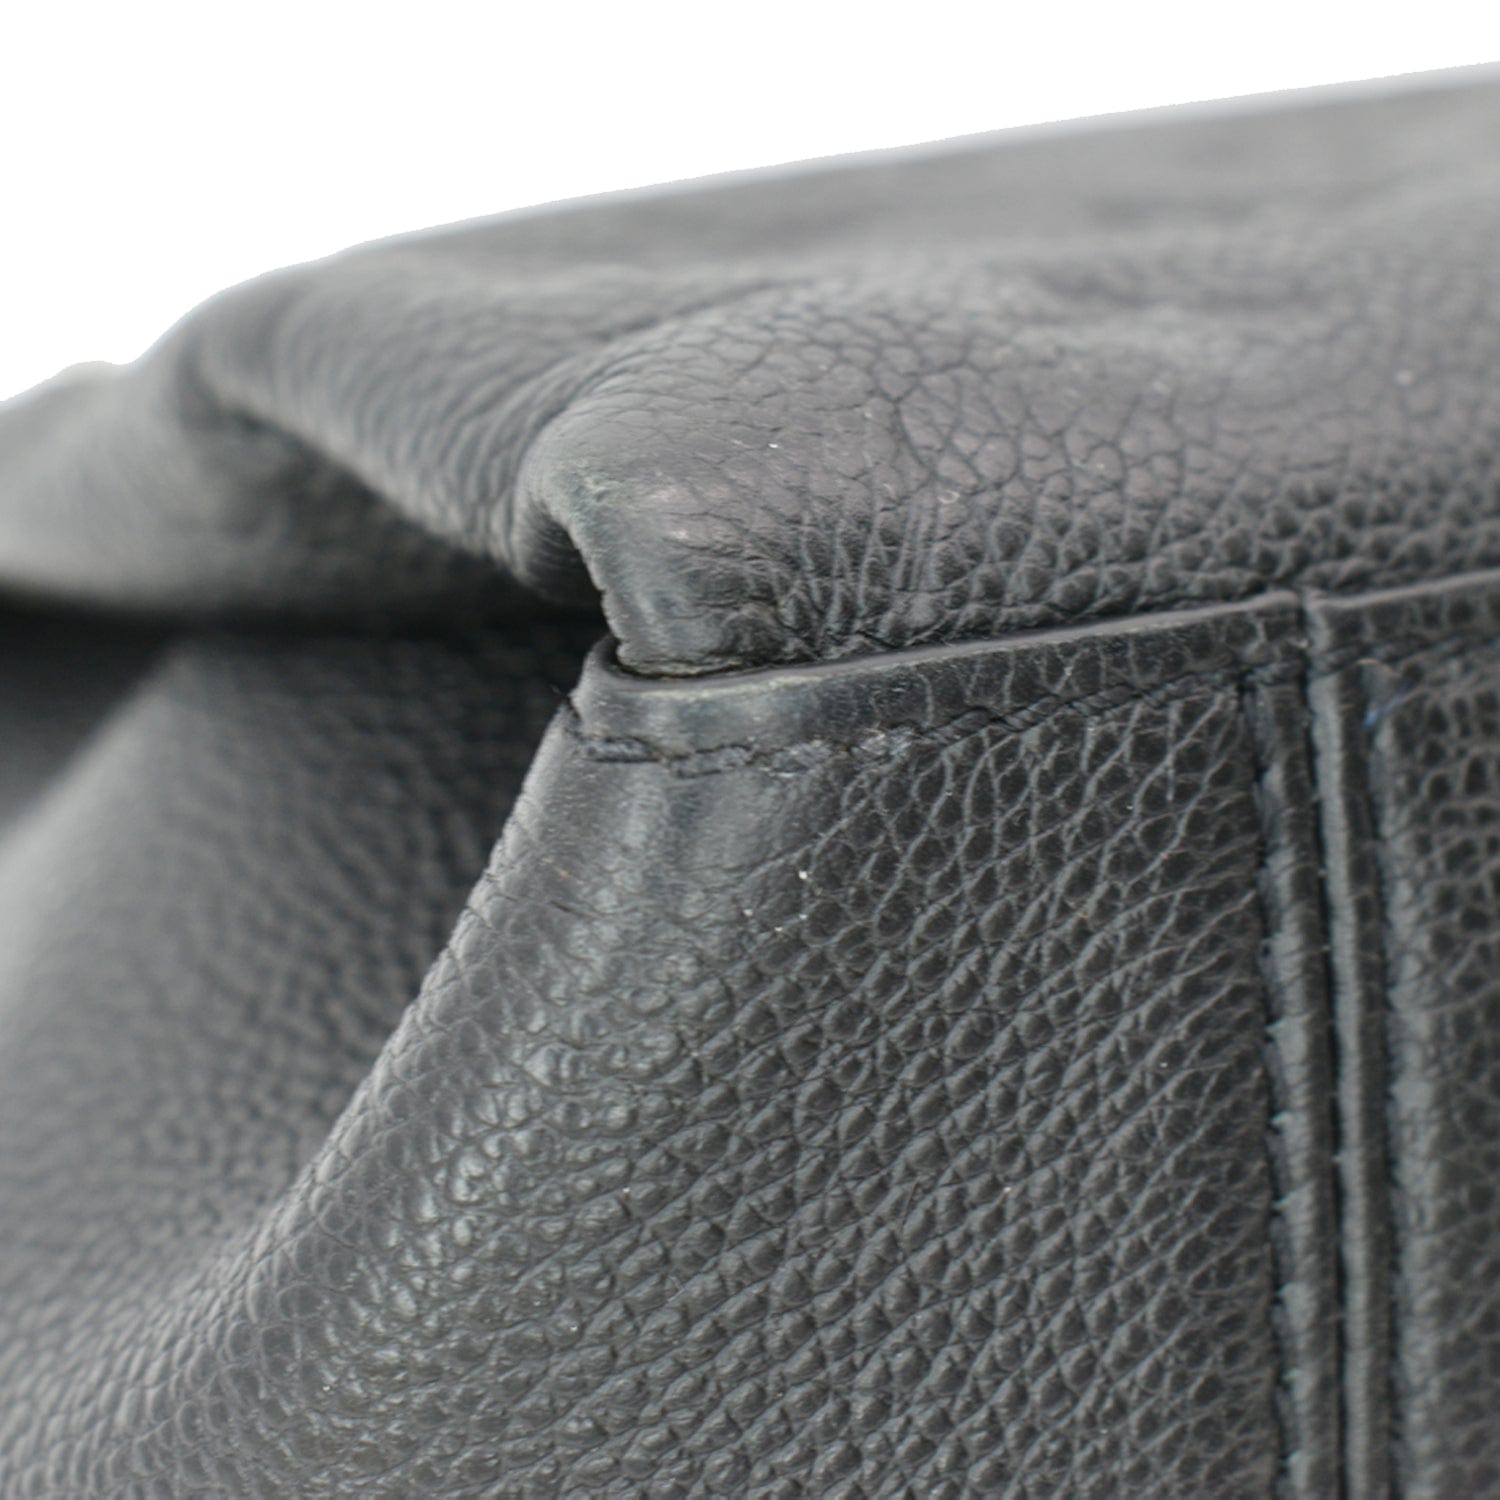 Louis Vuitton Monogram Empreinte Surene MM - Black Totes, Handbags